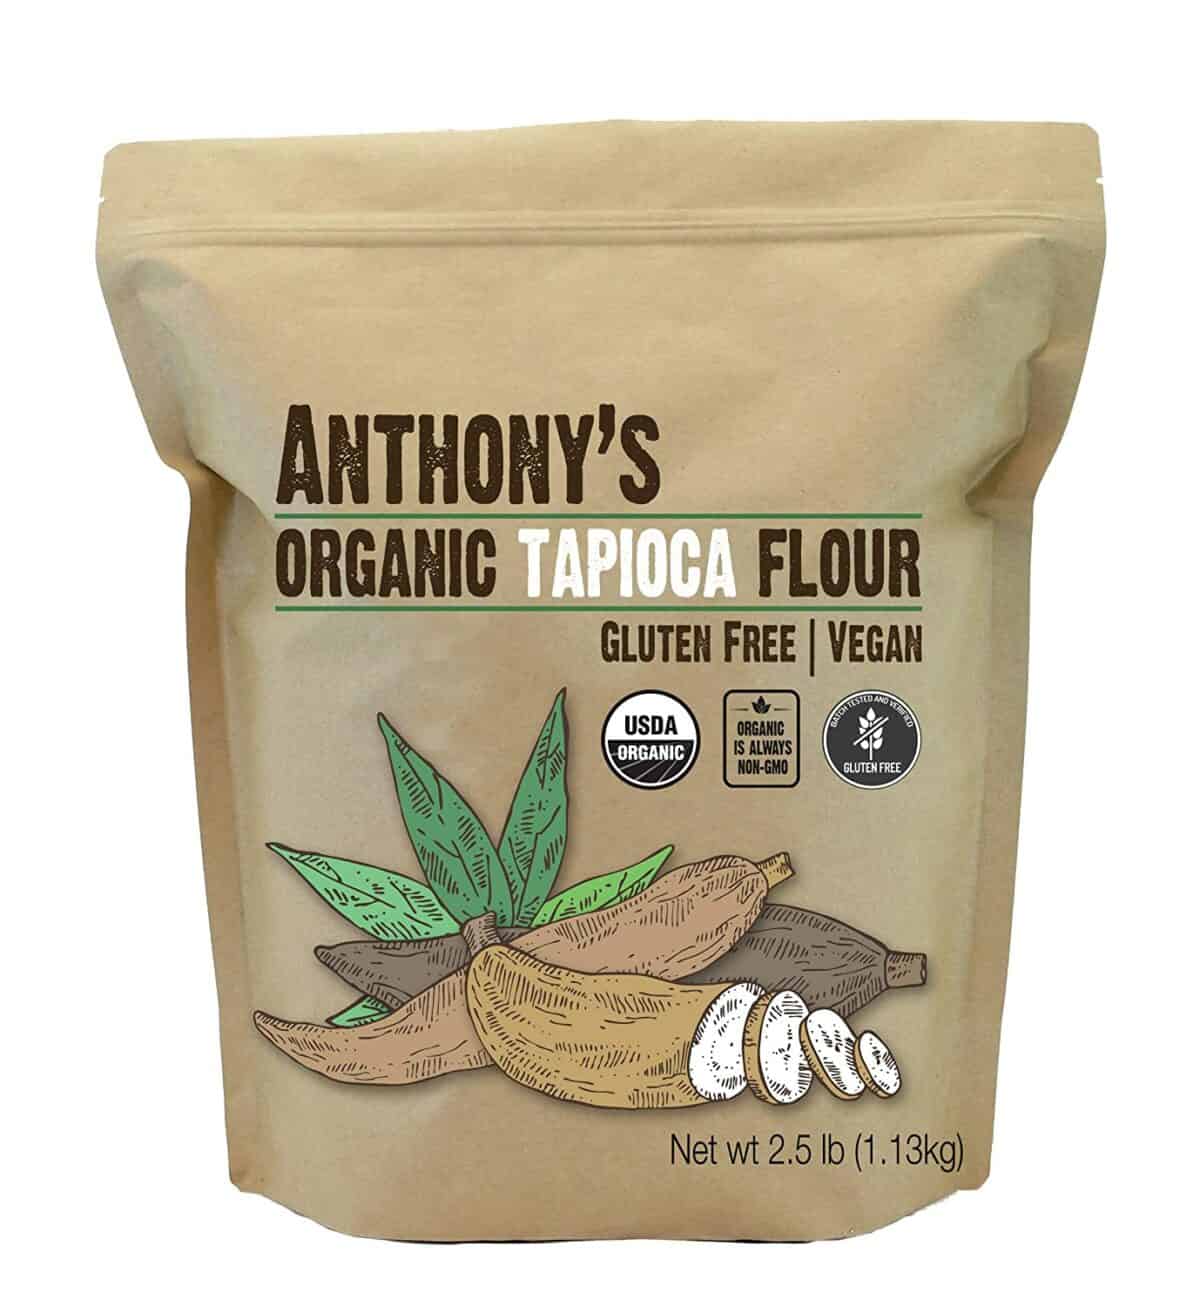 Anthonys organic tapioca flour